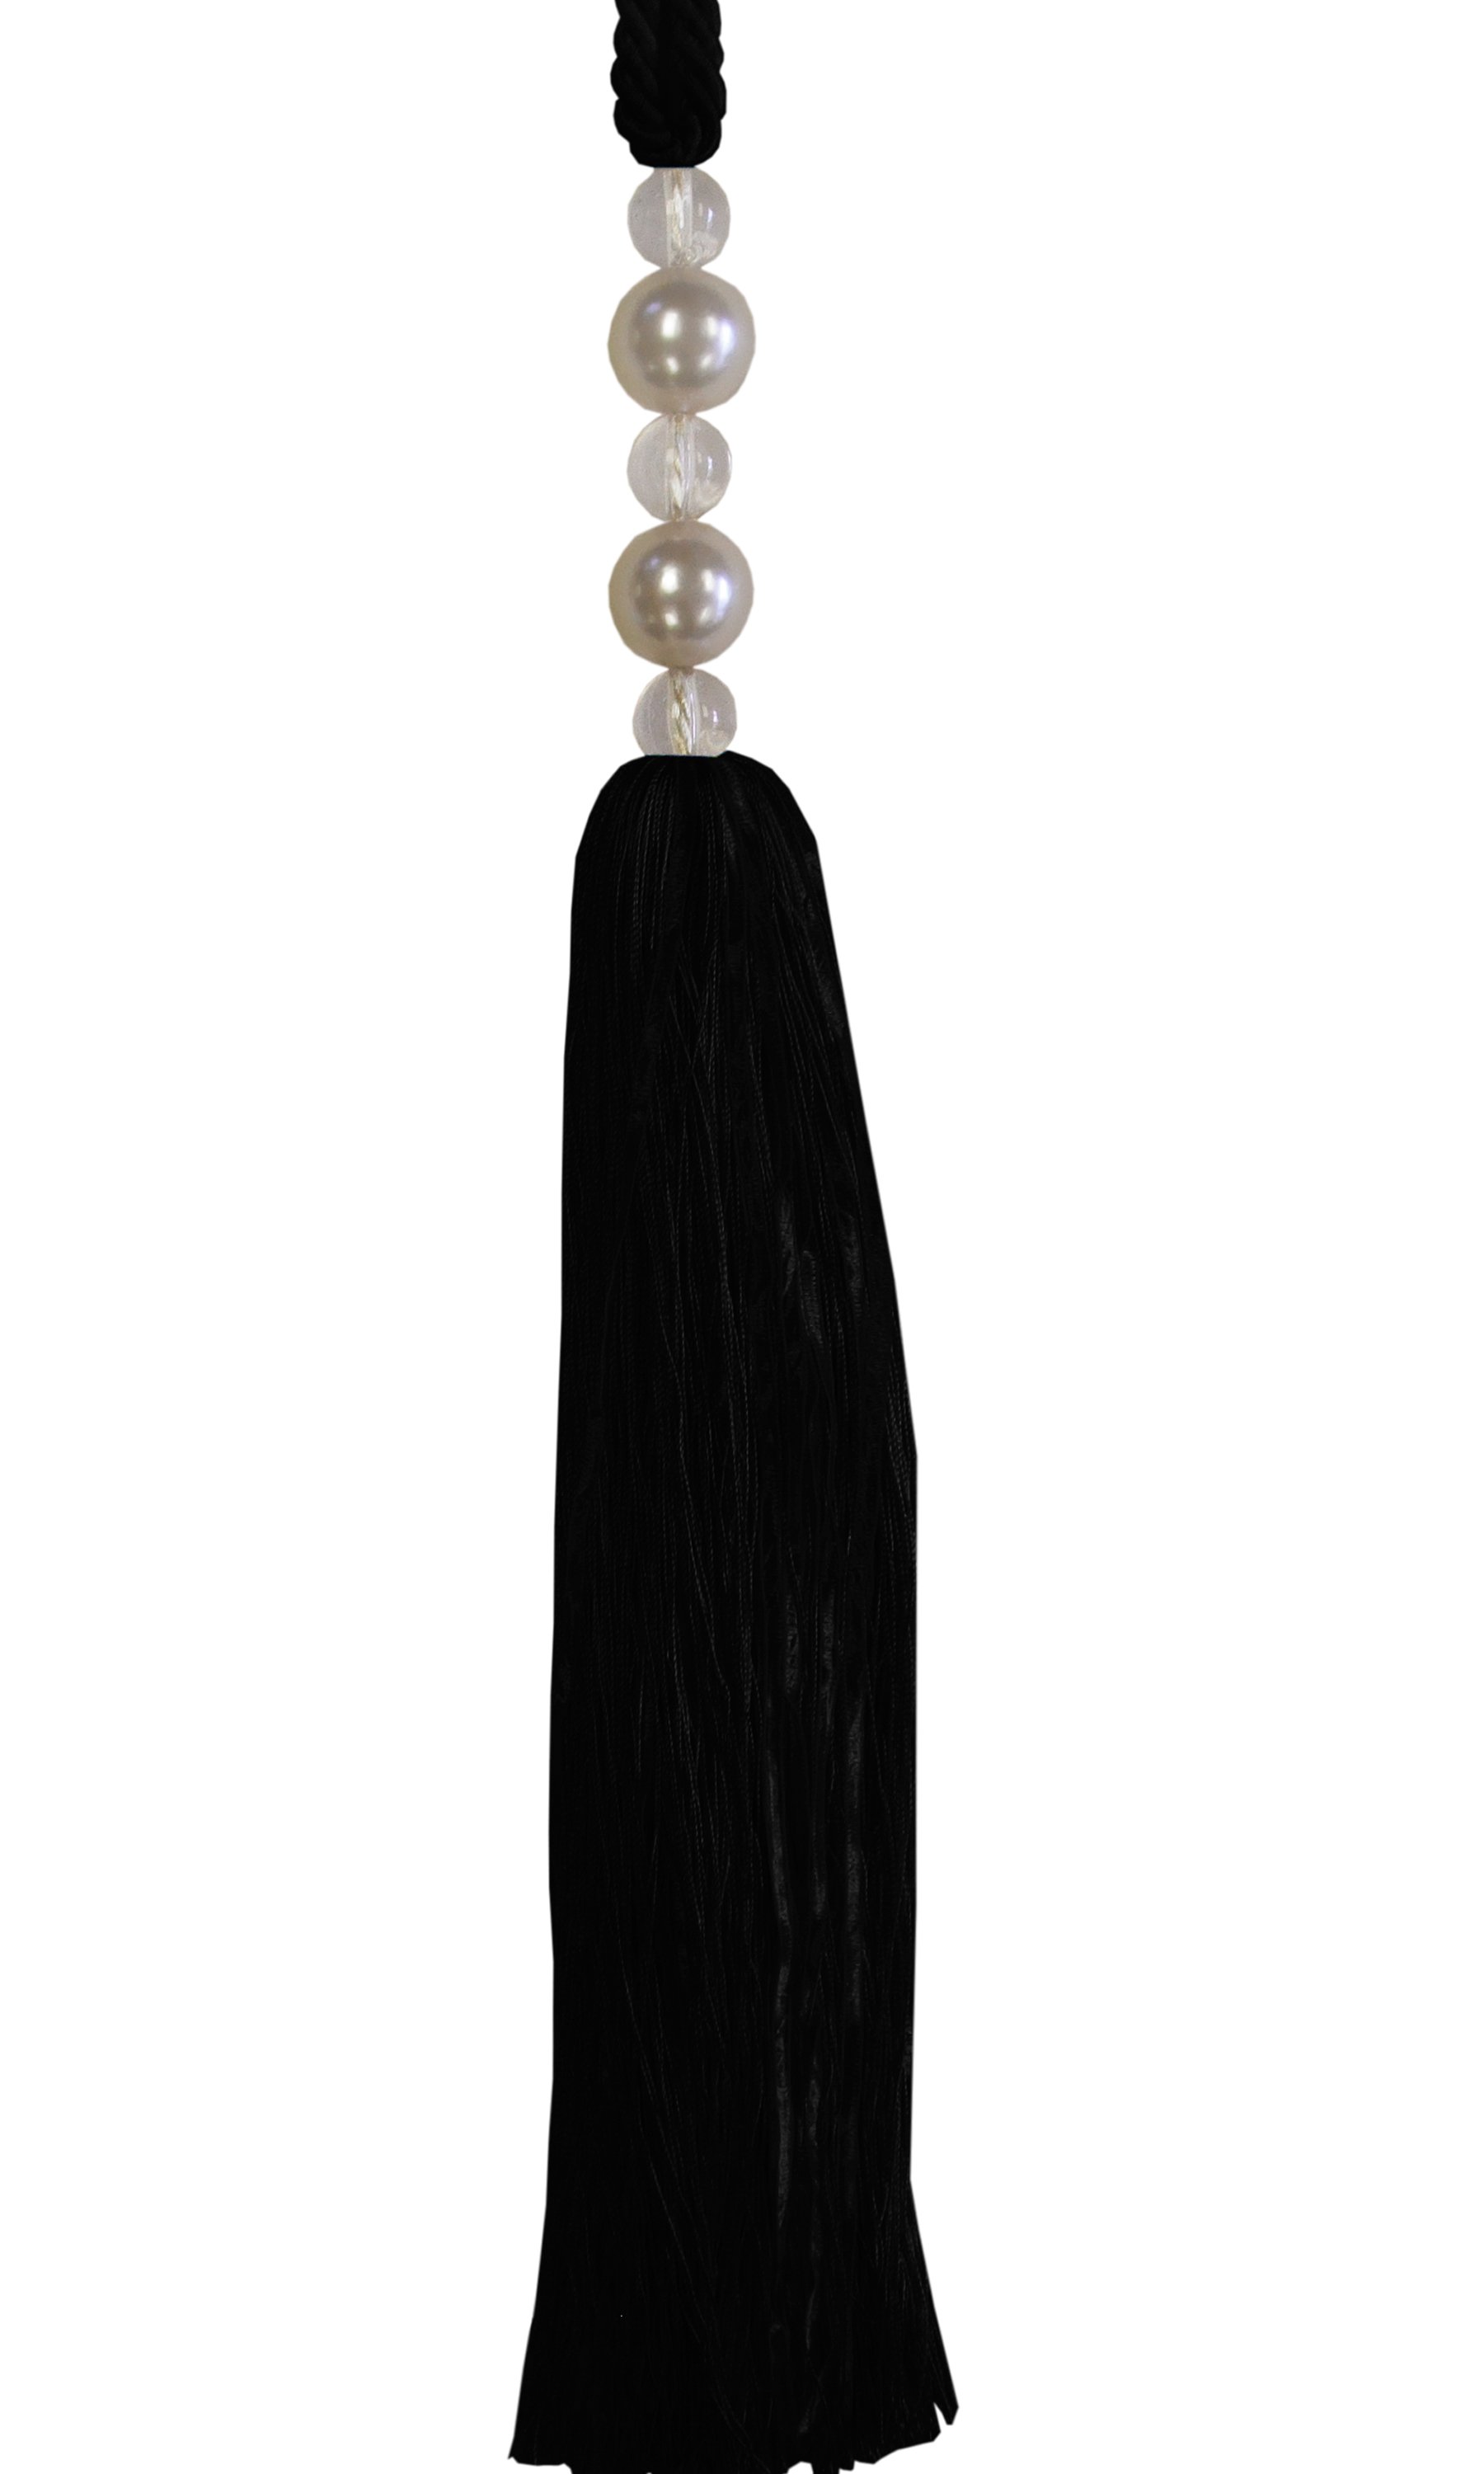 Pair 2 pieces Curtain Tie Backs - 40cm Tassel with Pearl Top - Black